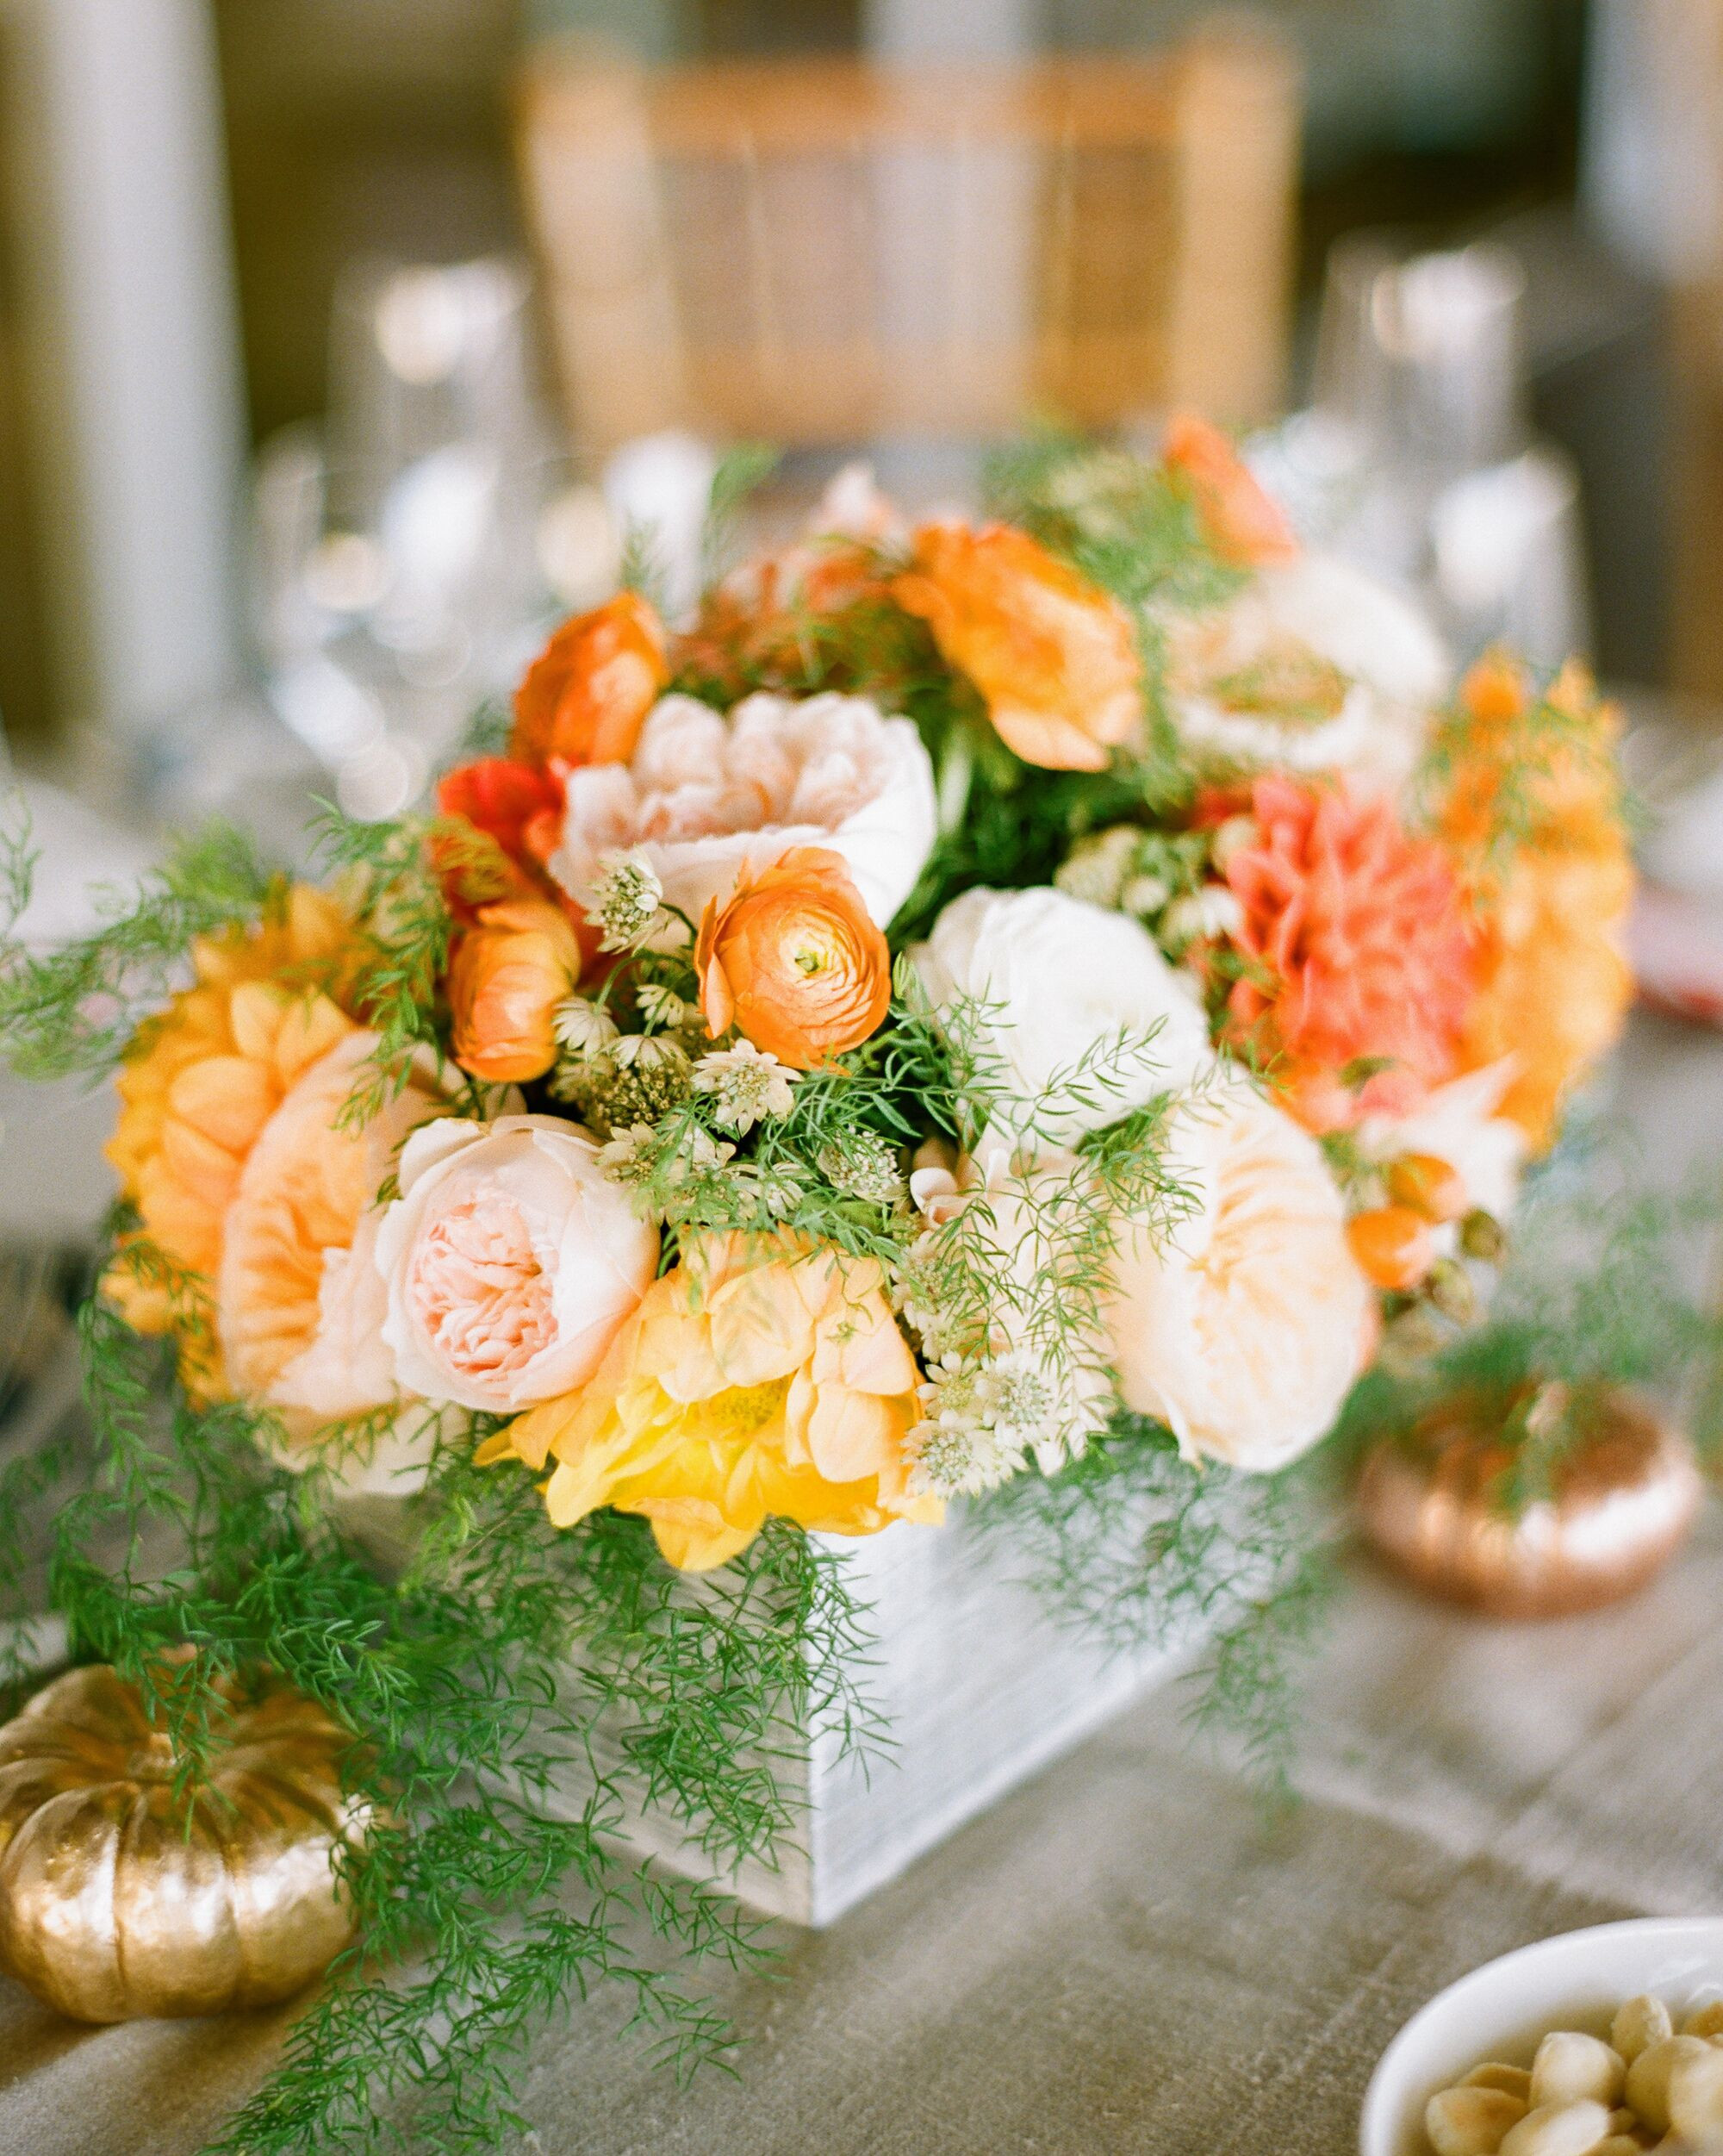 Wedding Reception Flowers
 Wedding Flowers Reception Centerpieces by Season